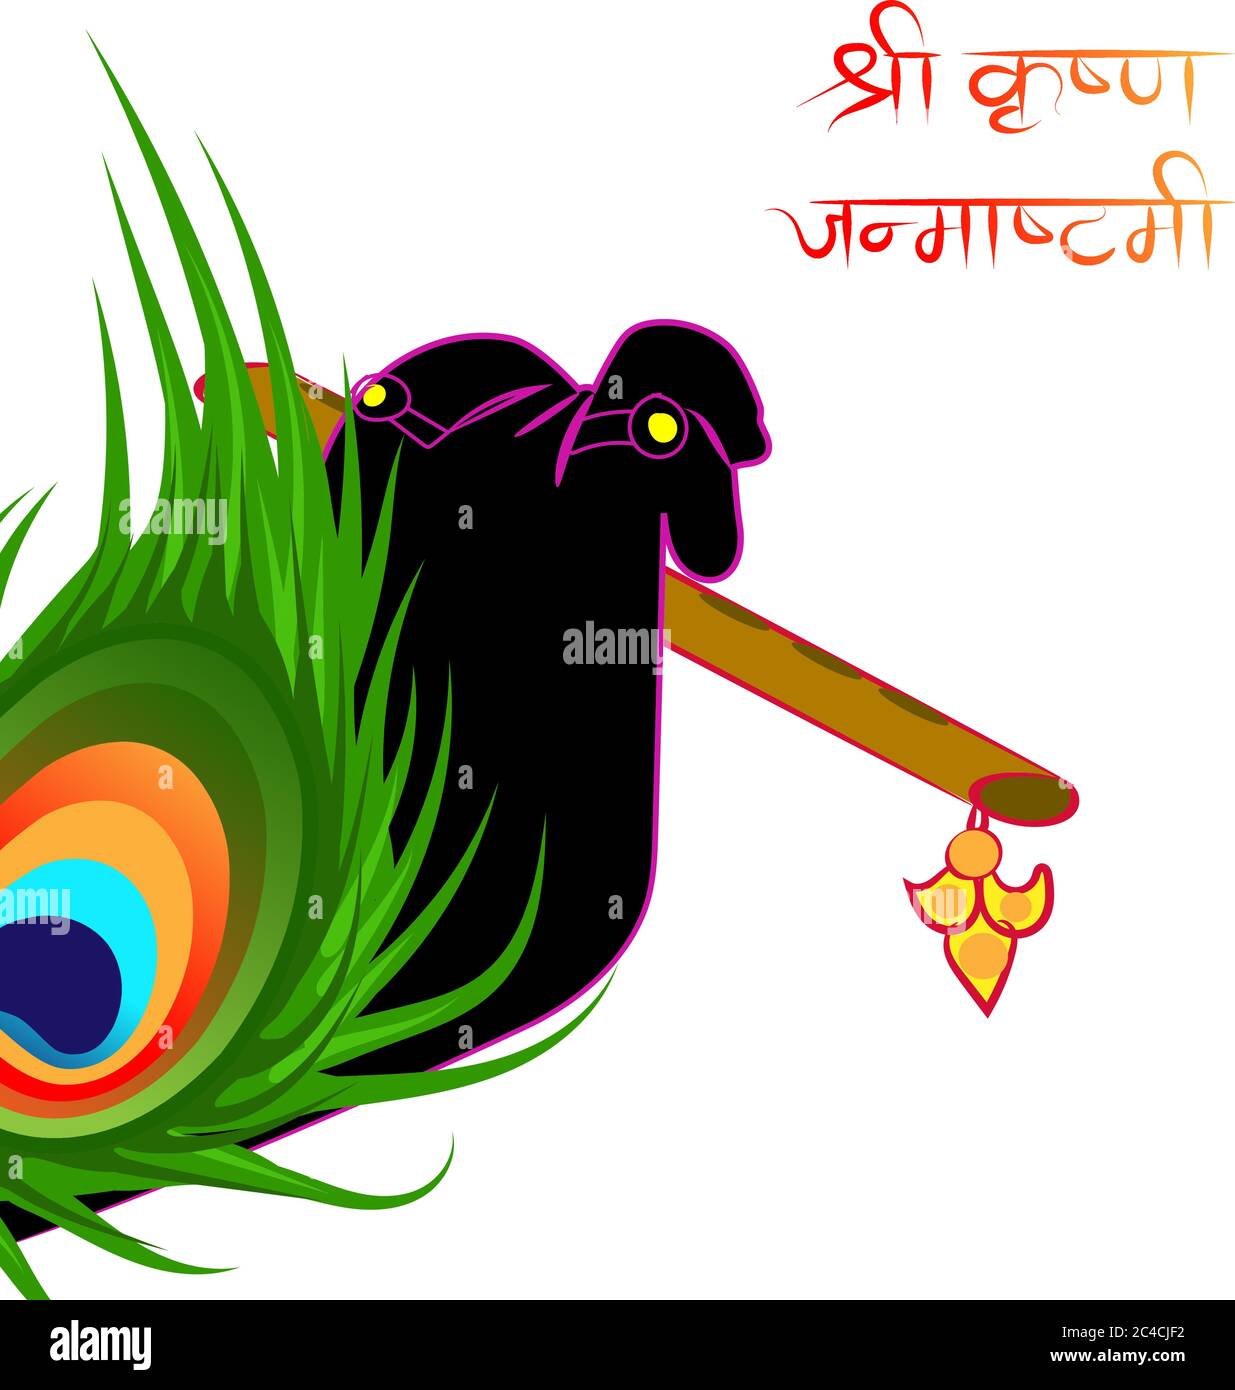 Vector illustration of Happy Janmashtami festival Lord Krishna playing bansuri in religious indian festival background,  Dahi Handi meaning cream and Stock Vector